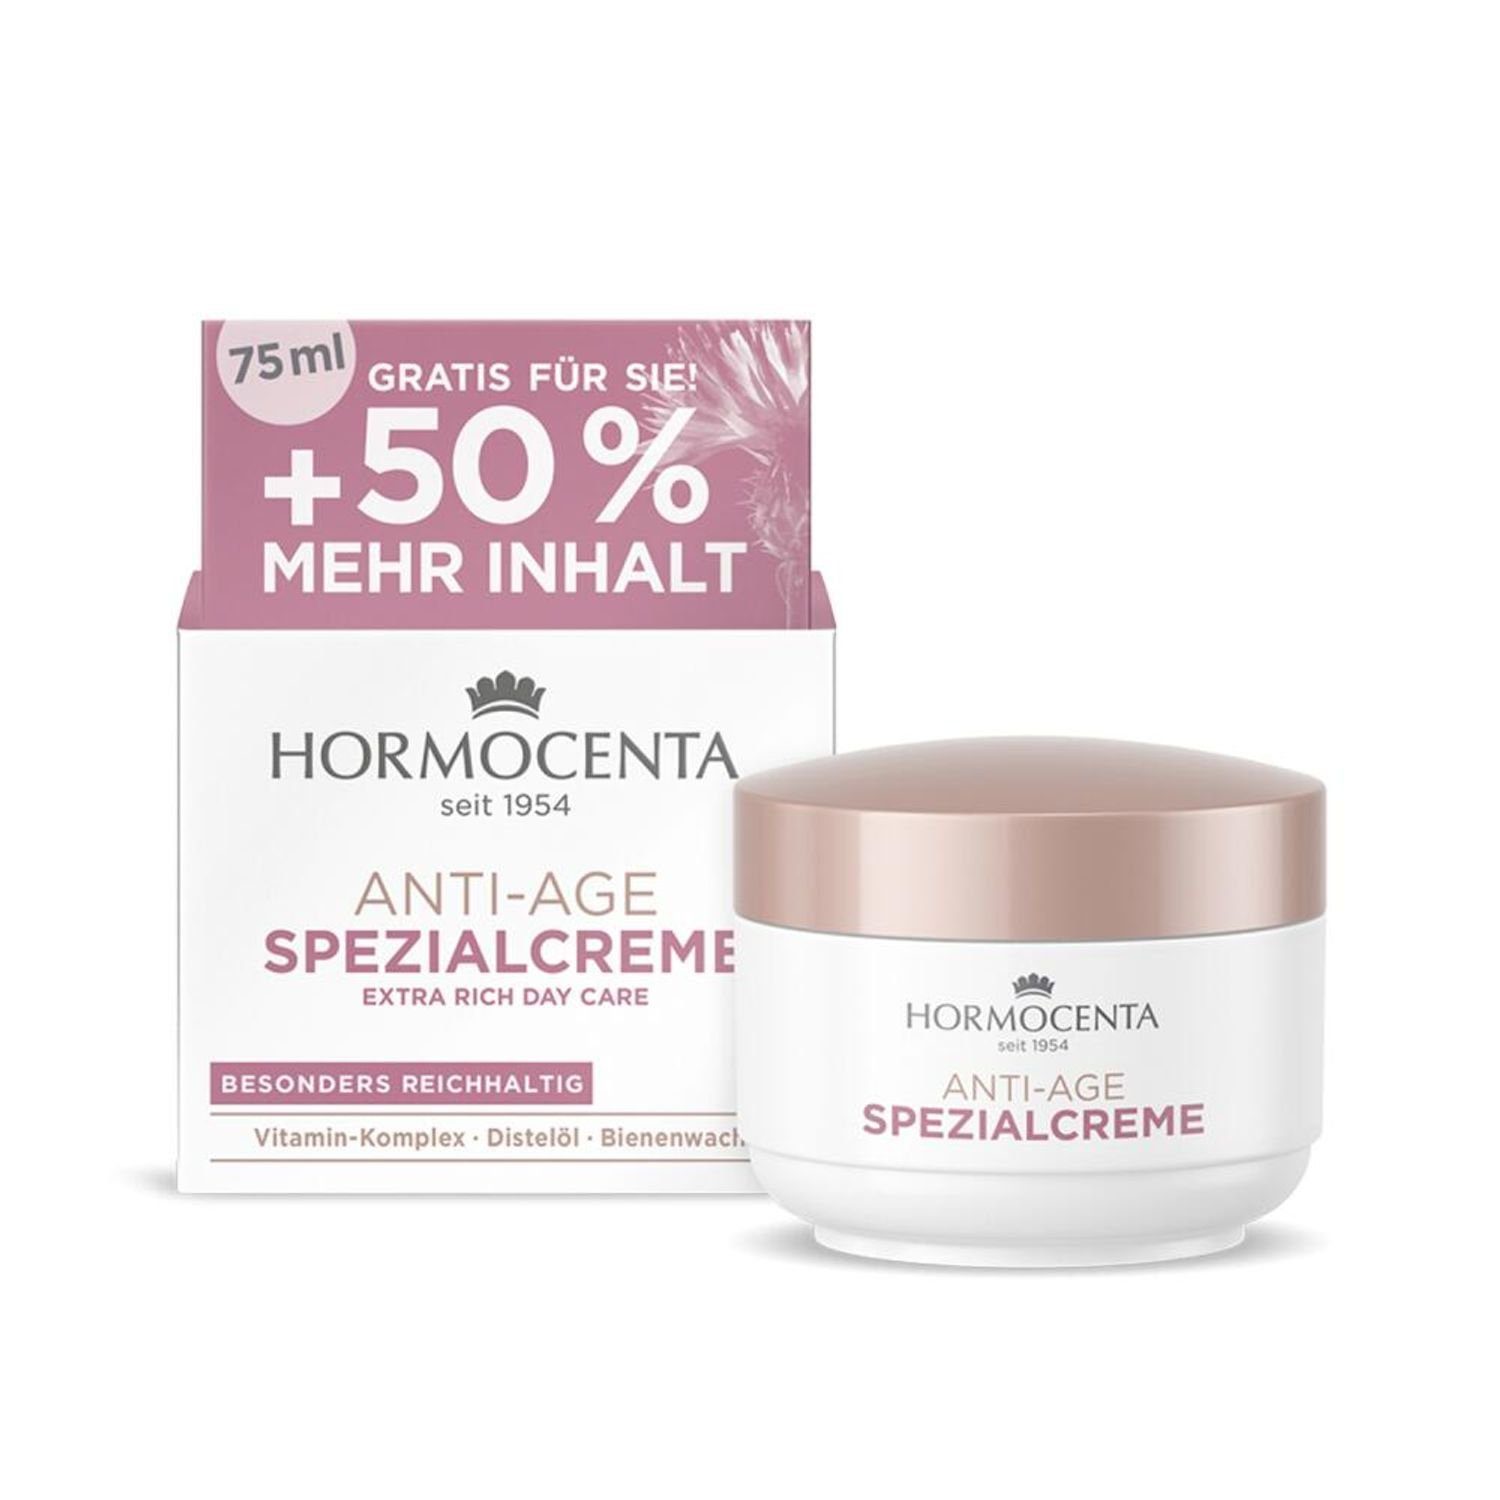 Hormocenta GmbH Kosmetik Hormocenta Spezialcreme 6x Anti Körpercreme Age Tagespflege Nachtlotion Haut 75ml